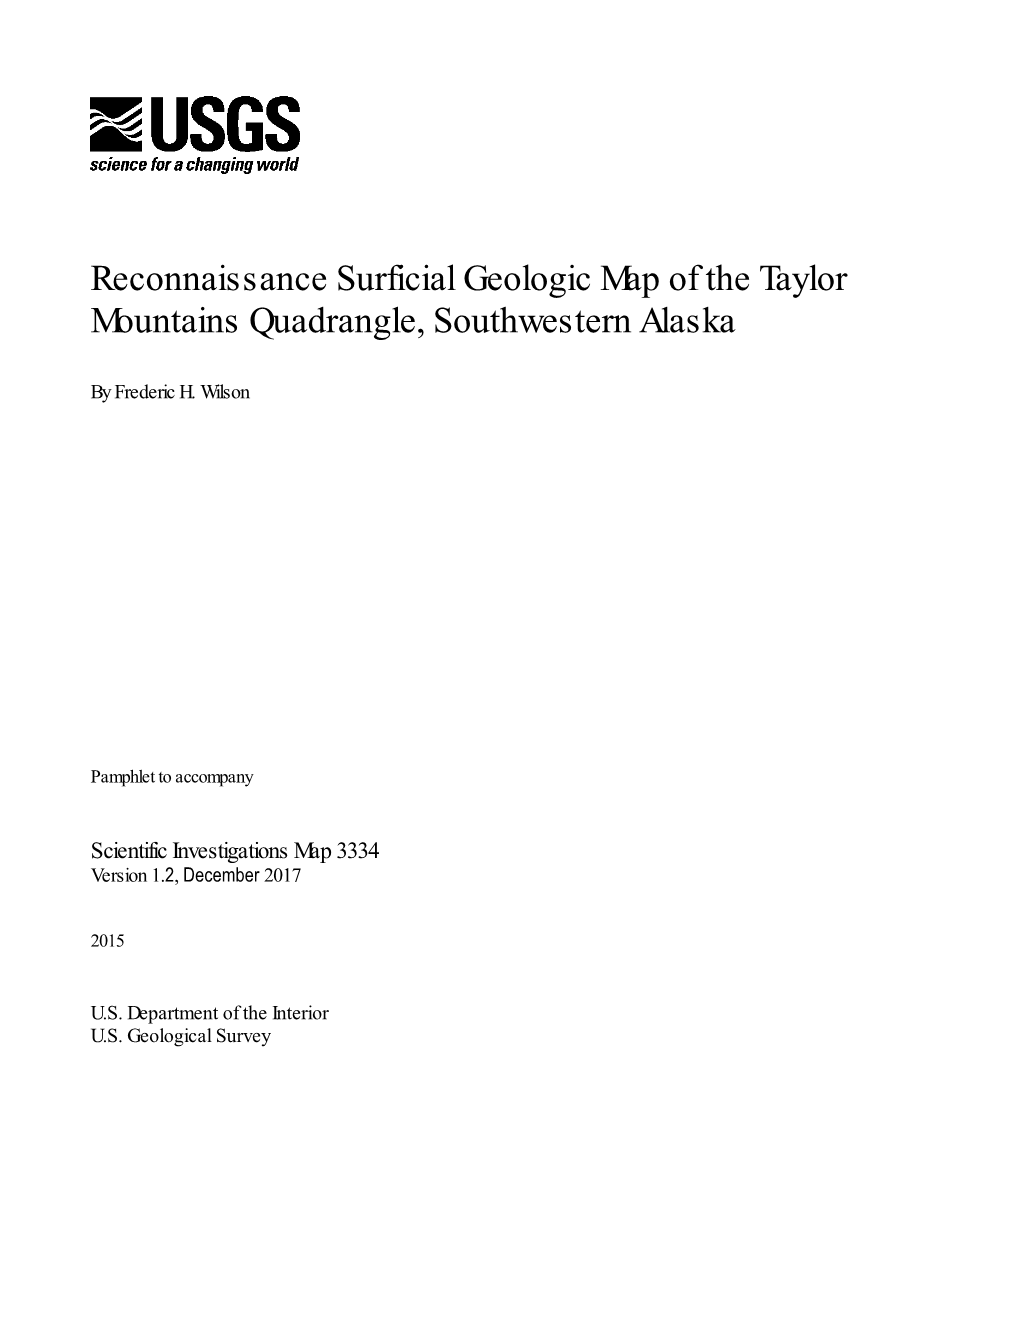 Reconnaissance Surficial Geologic Map of the Taylor Mountains Quadrangle, Southwestern Alaska